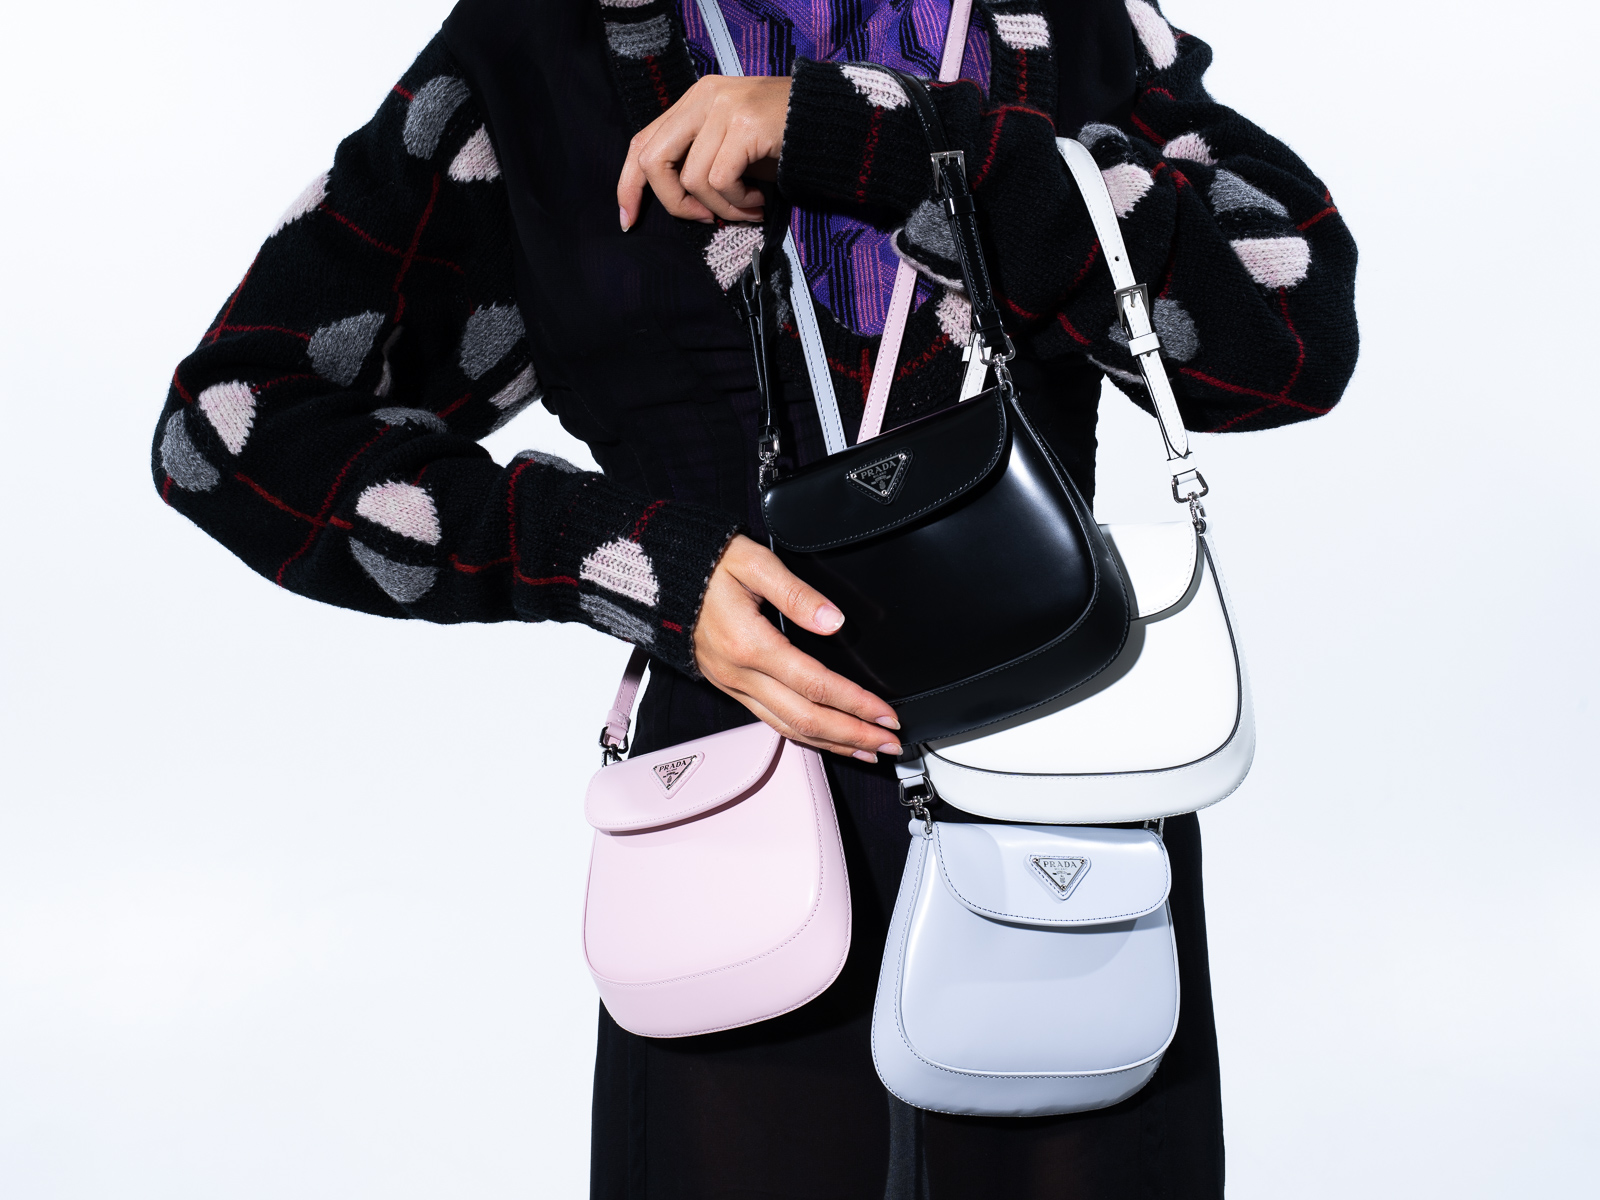 Prada Mini Padded Leather Shoulder Bag in Pink